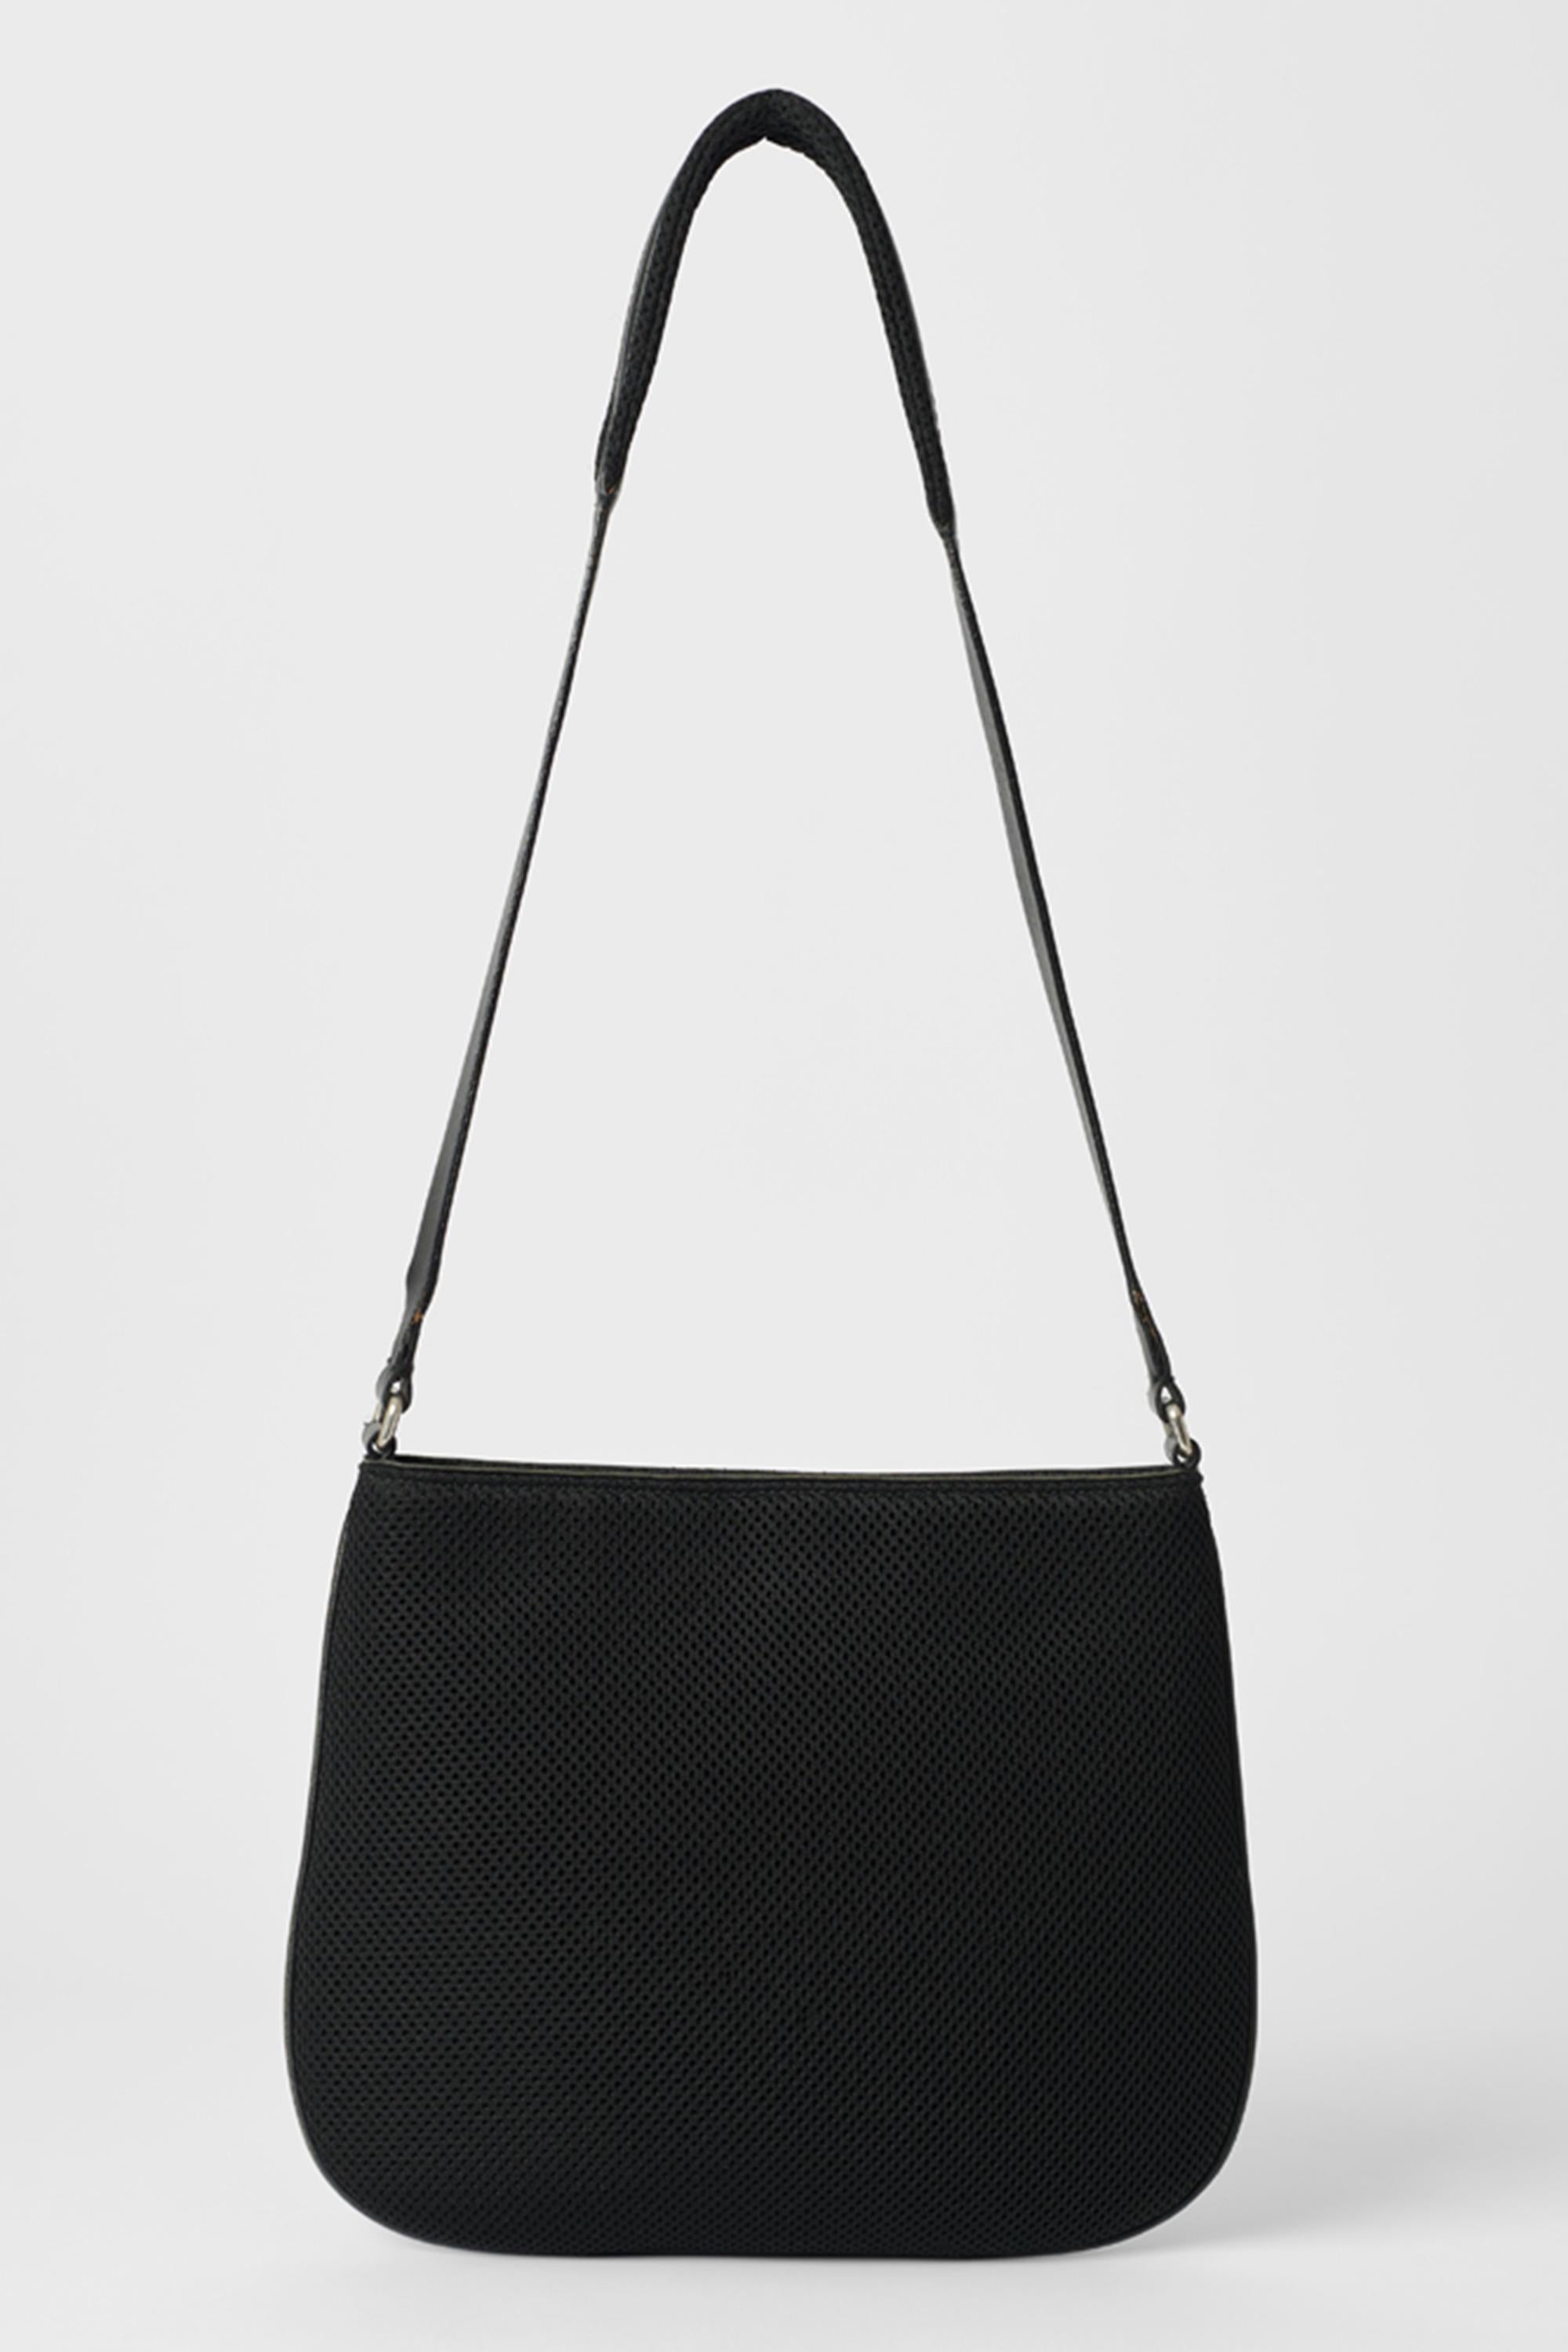 Miu Miu Vintage Black Leather & Neoprene Perforated Bag In Good Condition In London, GB